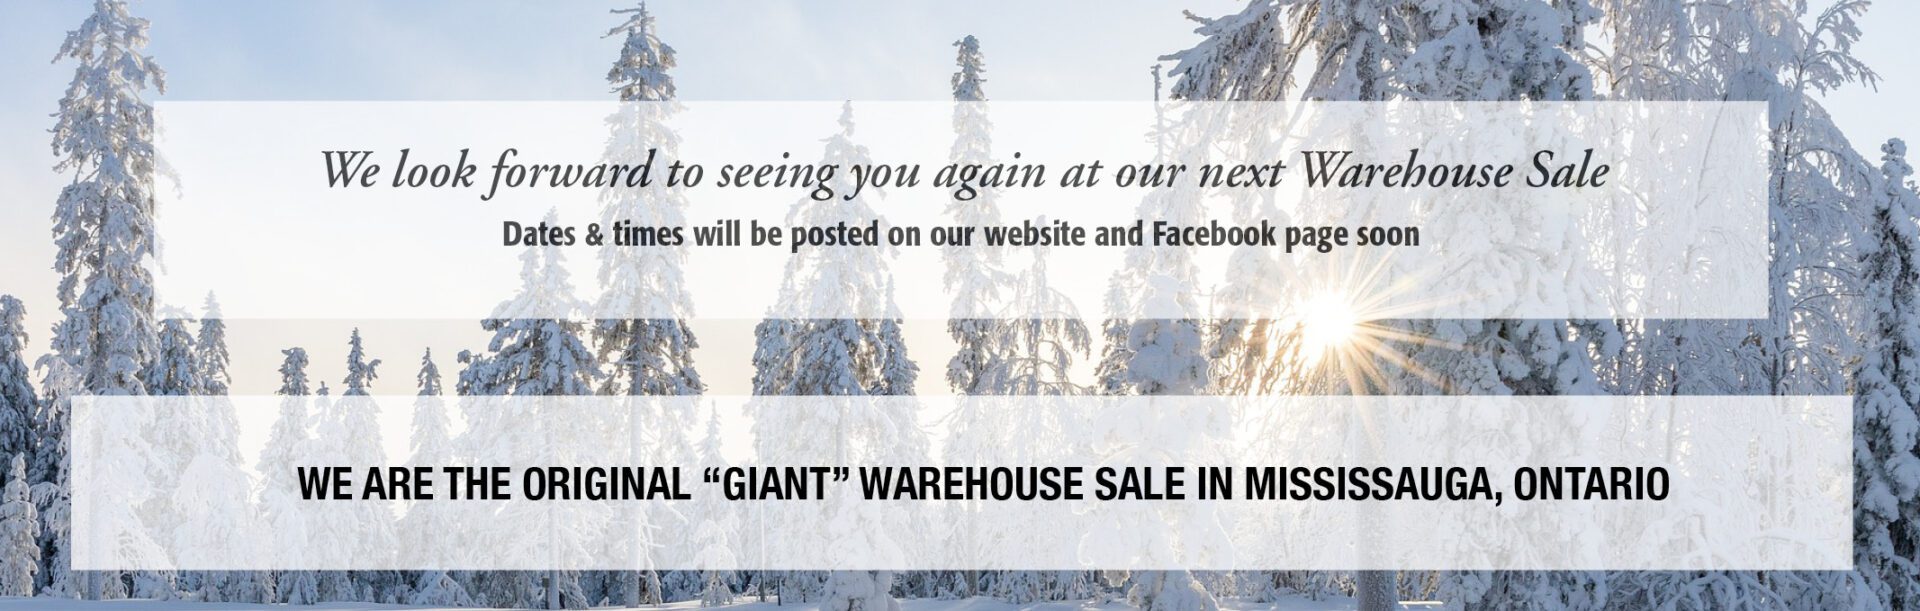 Giant Warehouse Sale Mississauga